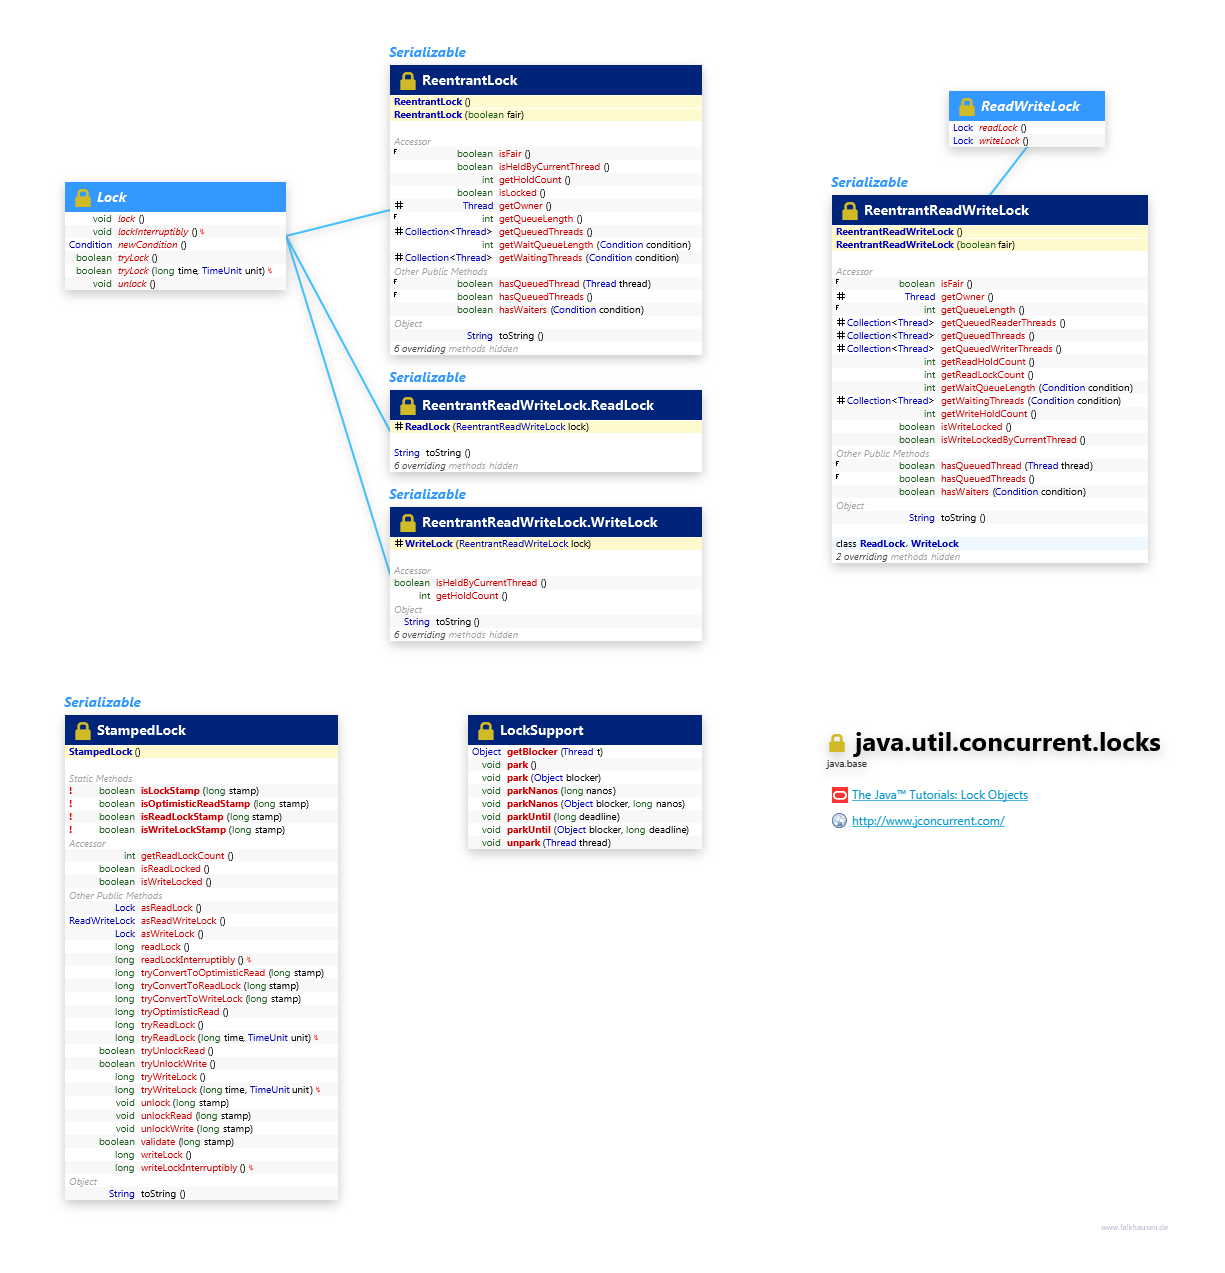 java.util.concurrent.locks Lock class diagram and api documentation for Java 10